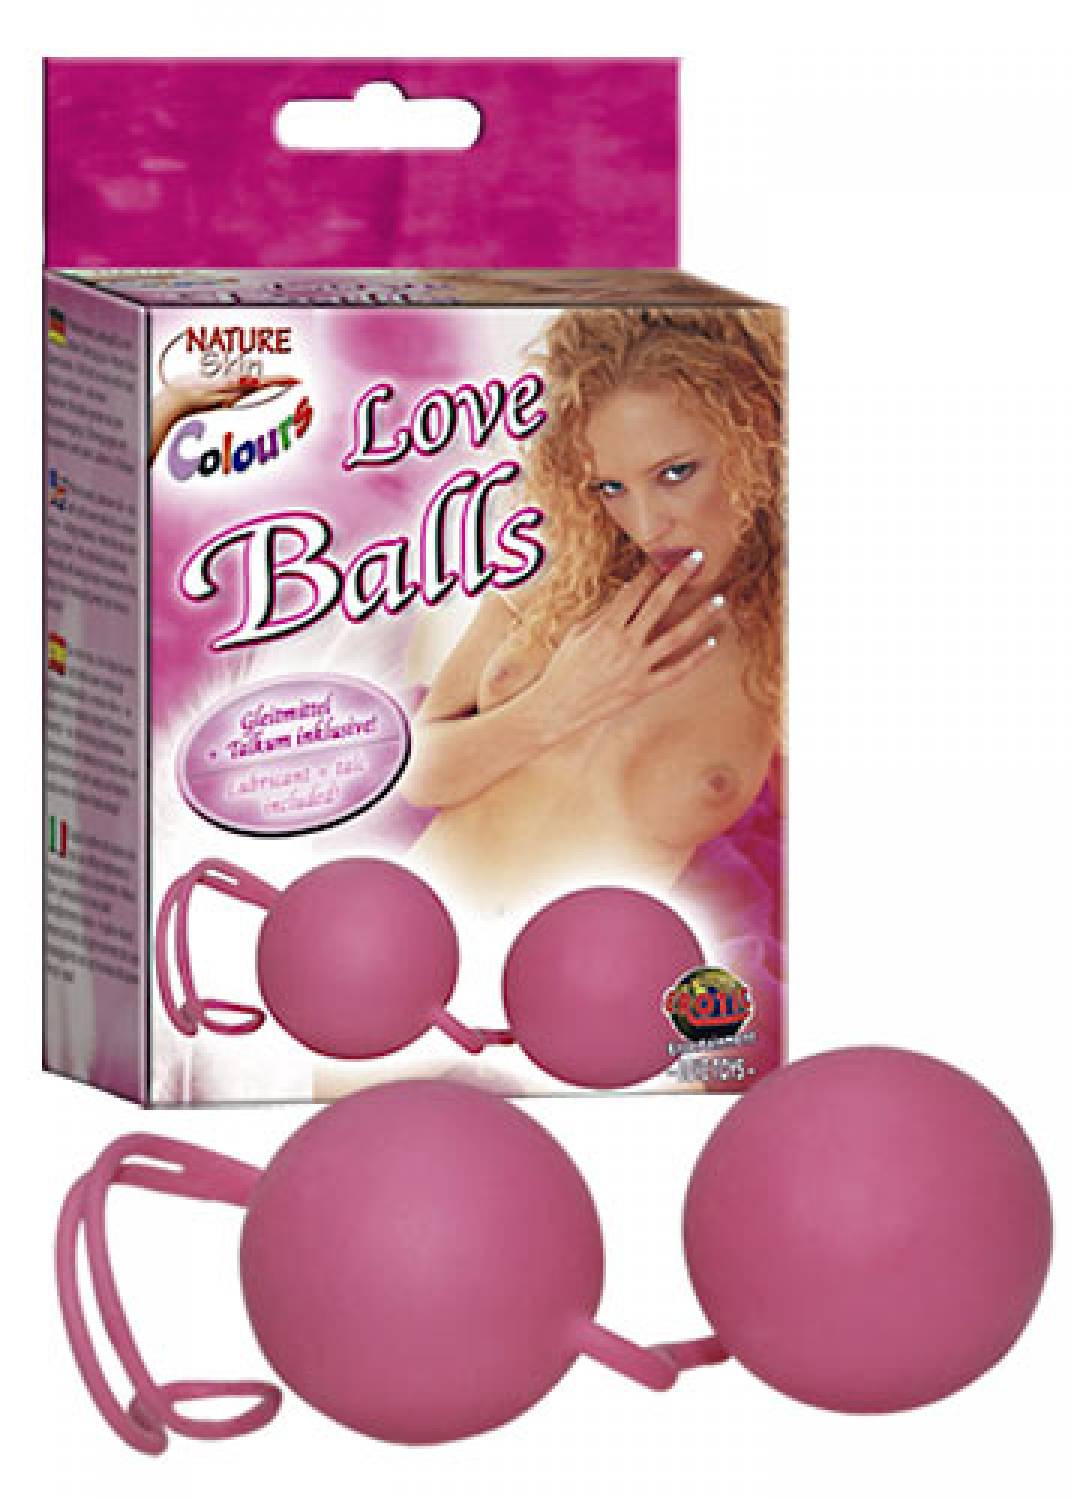 Erotic Entertainment Love Toys Love Balls Nature skin